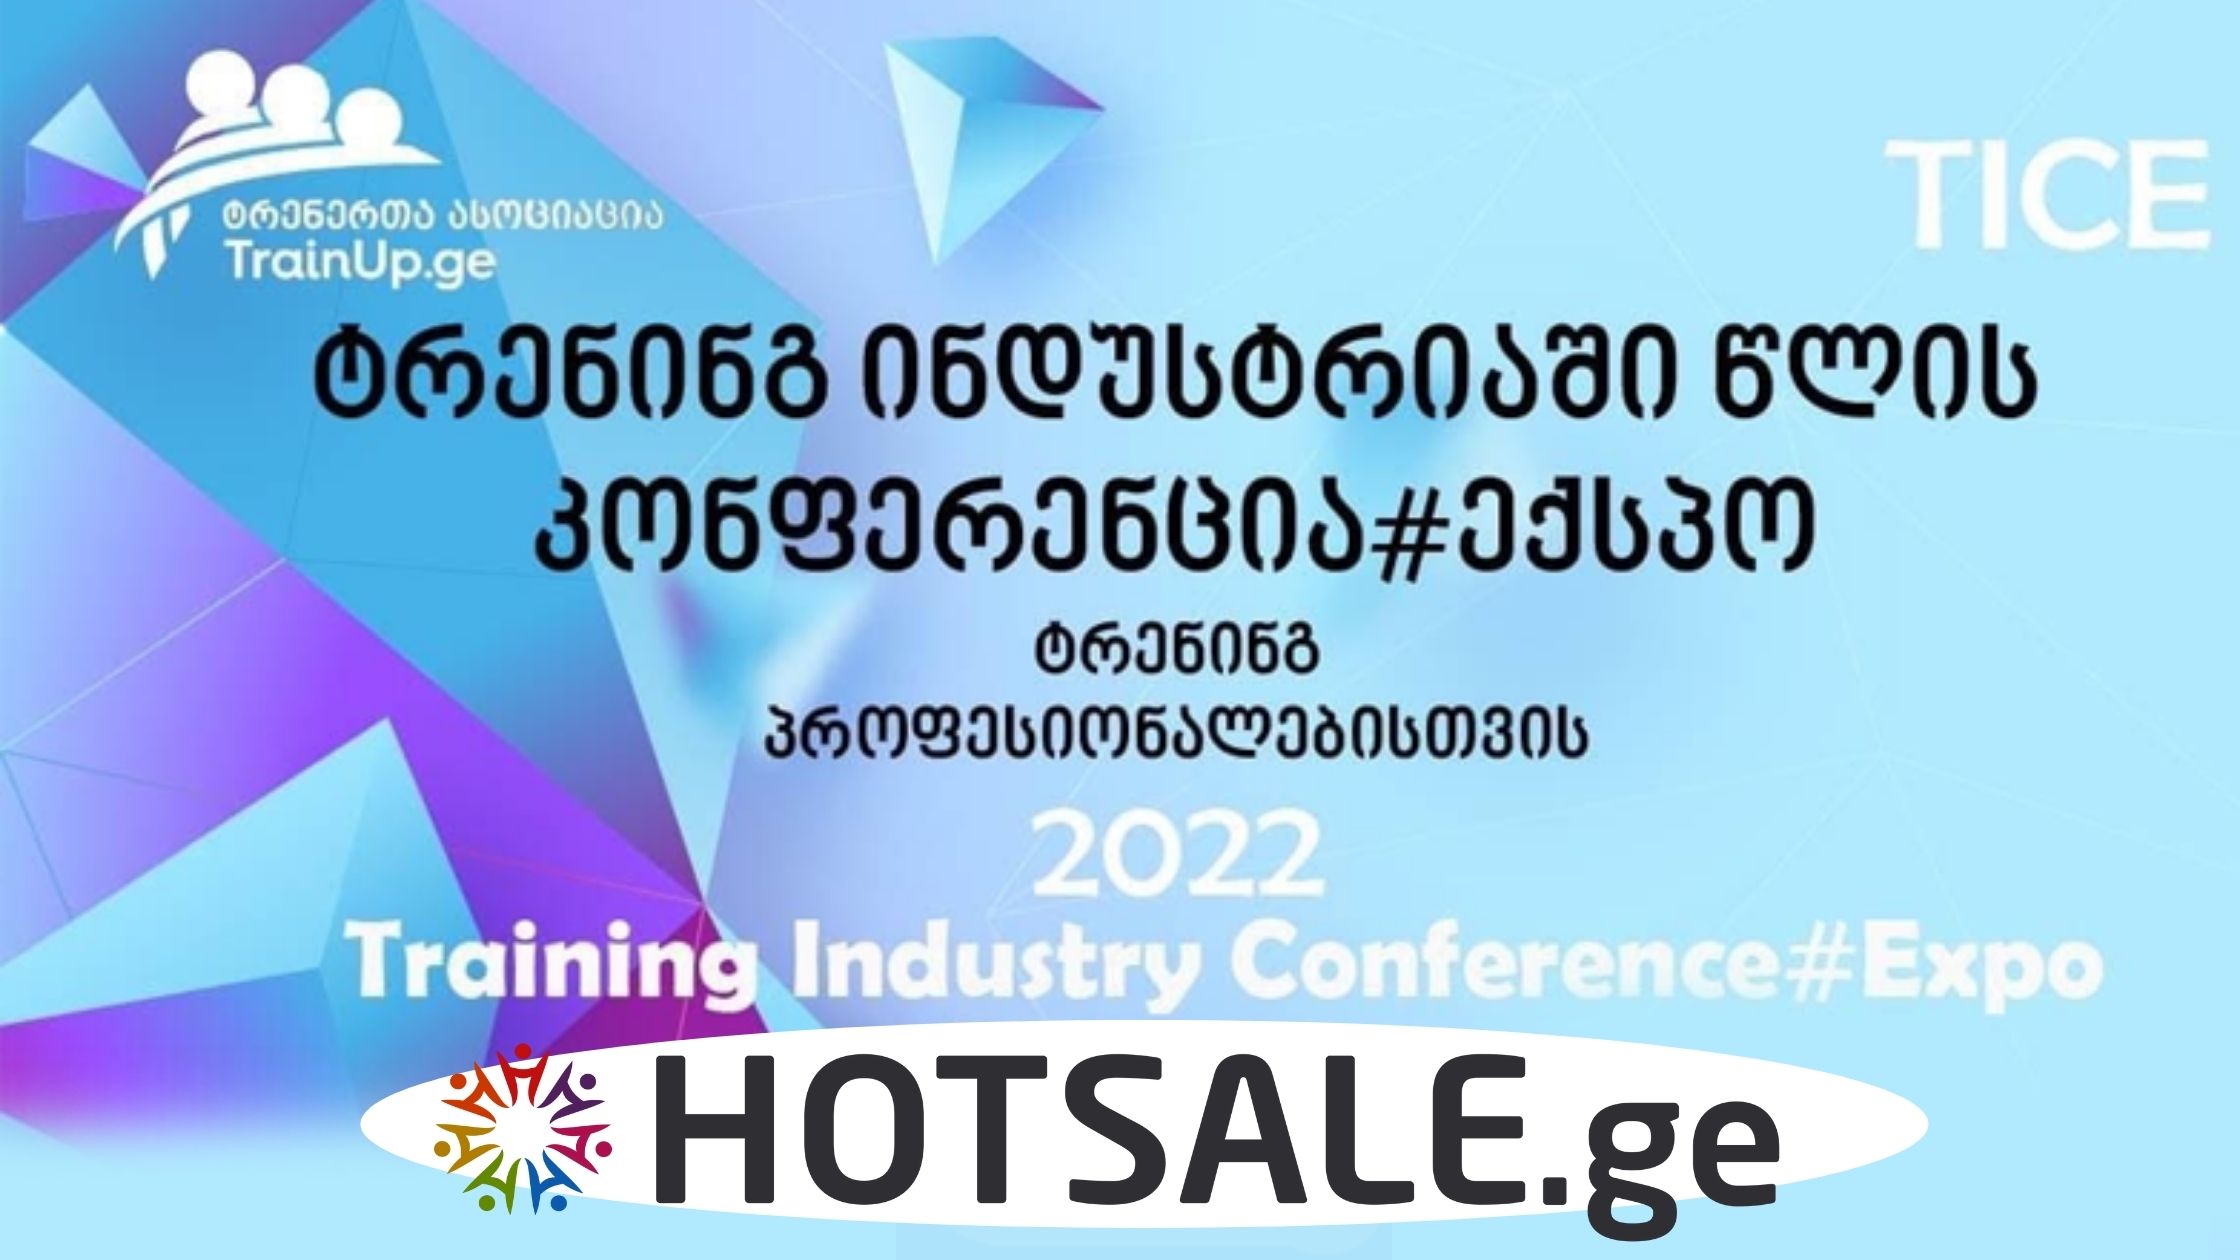 Hotsale.ge და “TICE 2022(Training Industry Conference #Expo)“ პარტნიორები გახდნენ